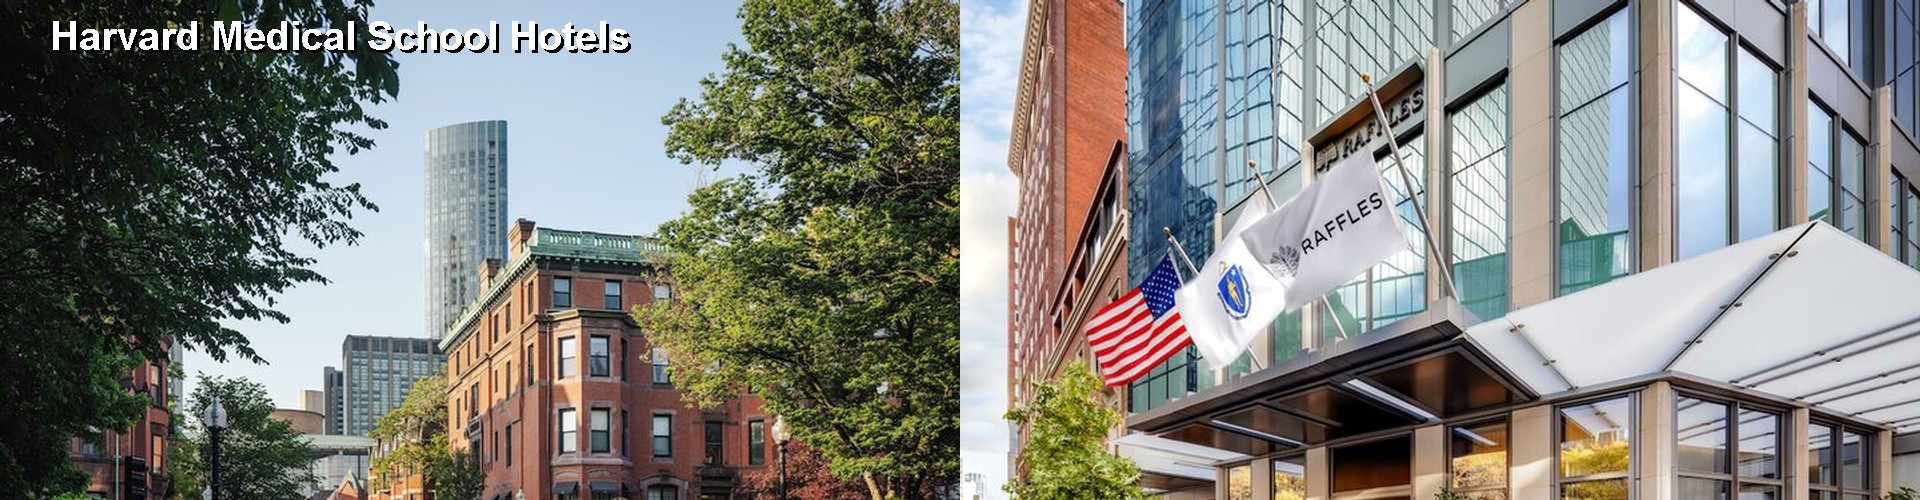 5 Best Hotels near Harvard Medical School